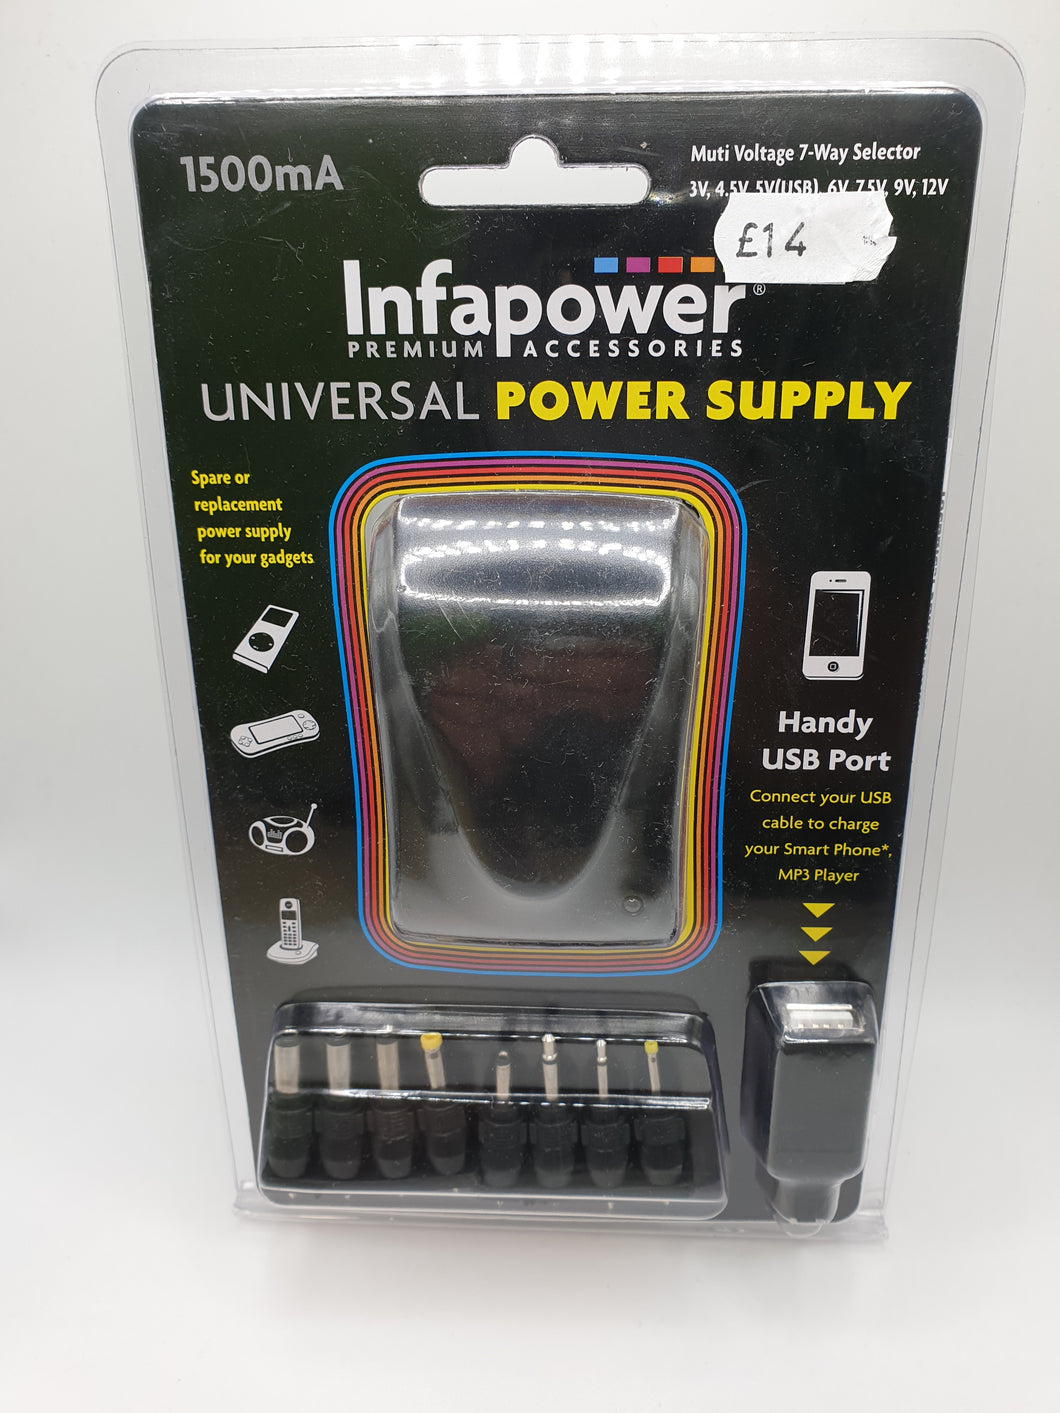 Infapower Universal Power Supply Multi Voltage 7 Way Selector 1500Mah For Radio MP3 Phones Gadgets USB Port